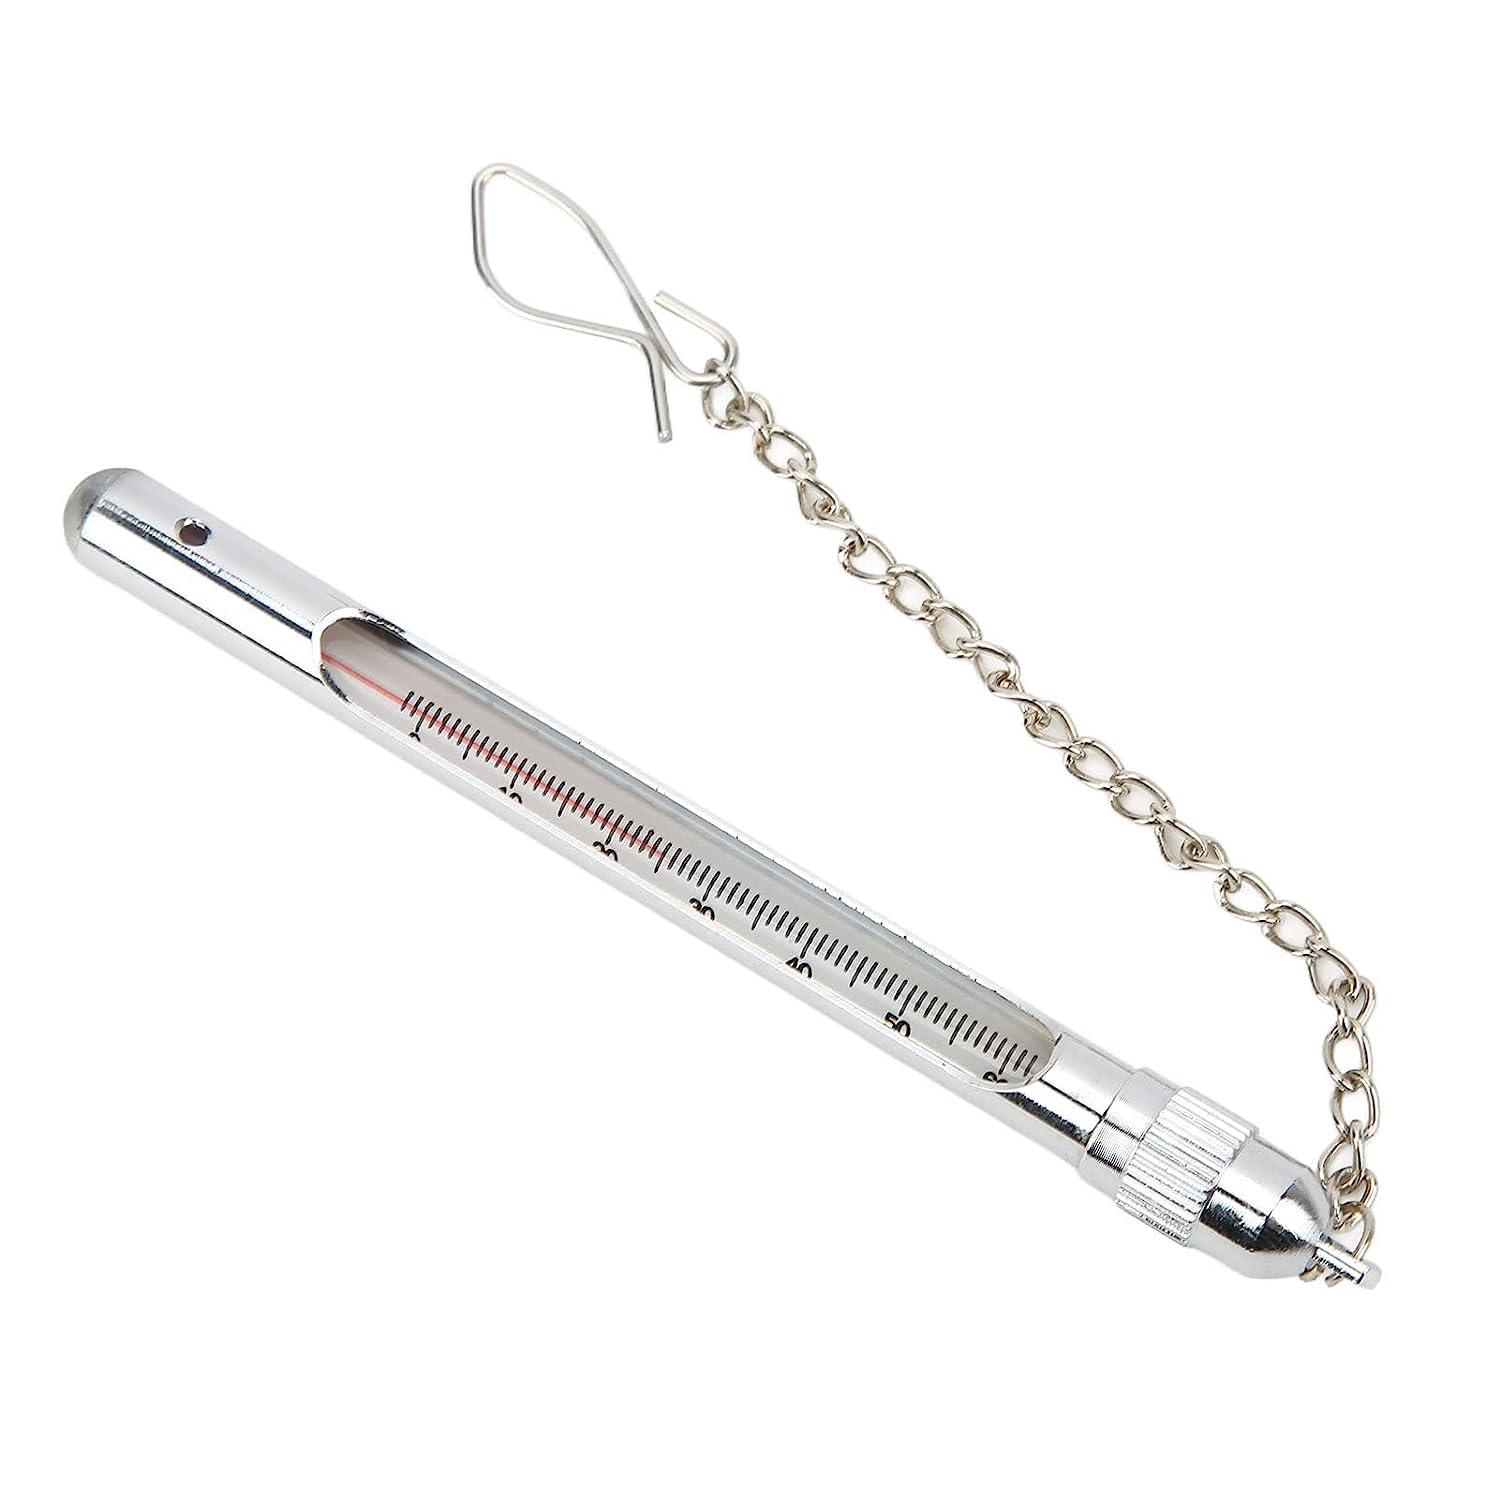 Fishing Thermometer, Stream Water Temperature Measurement Tool